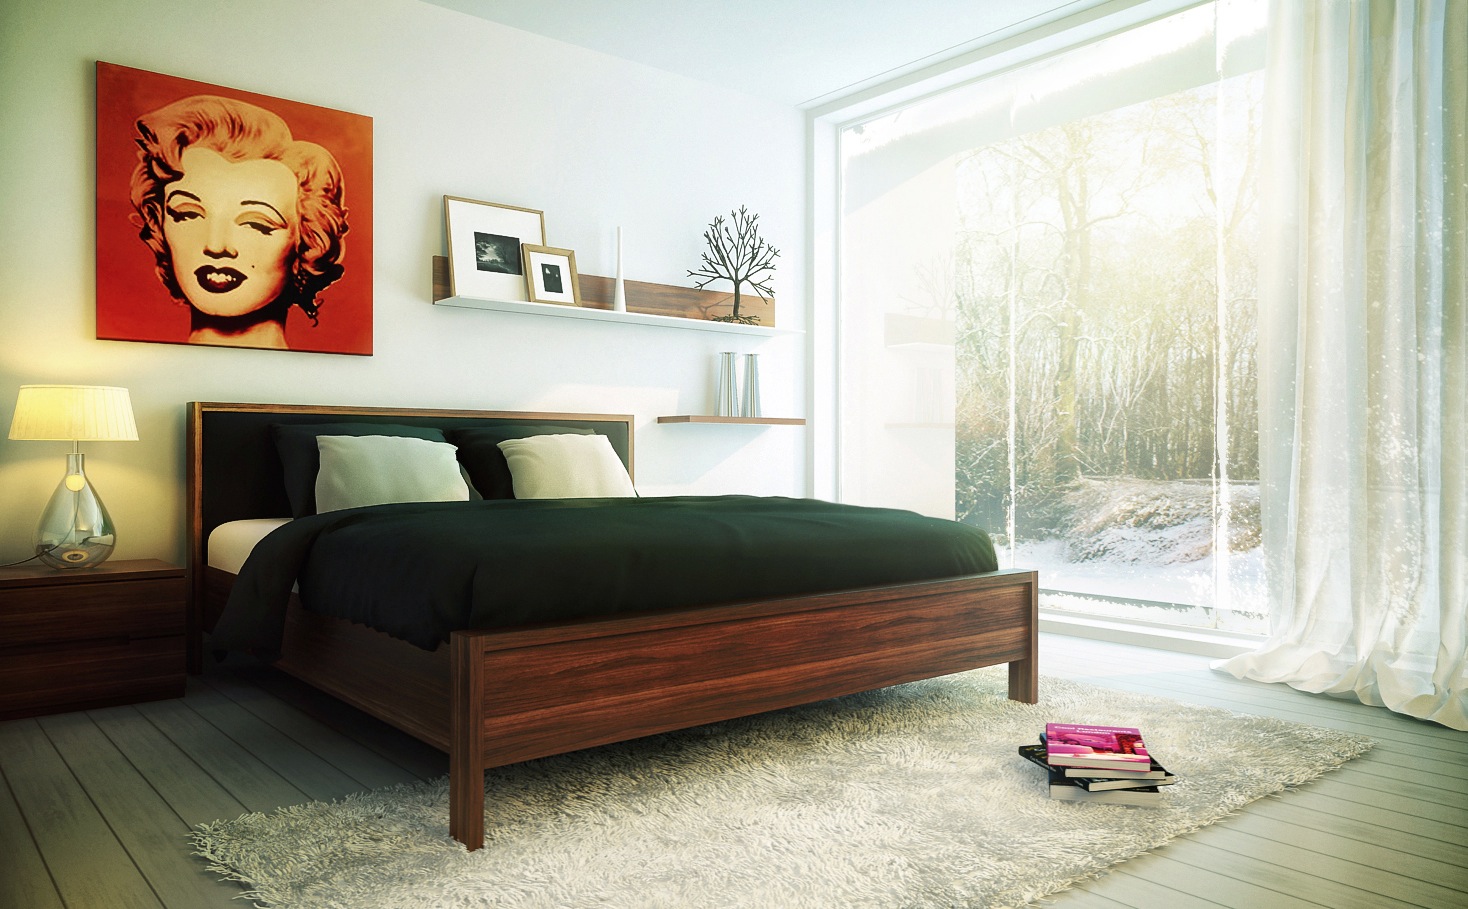 Understated Bedroom Decor Pop Art Interior Design Ideas